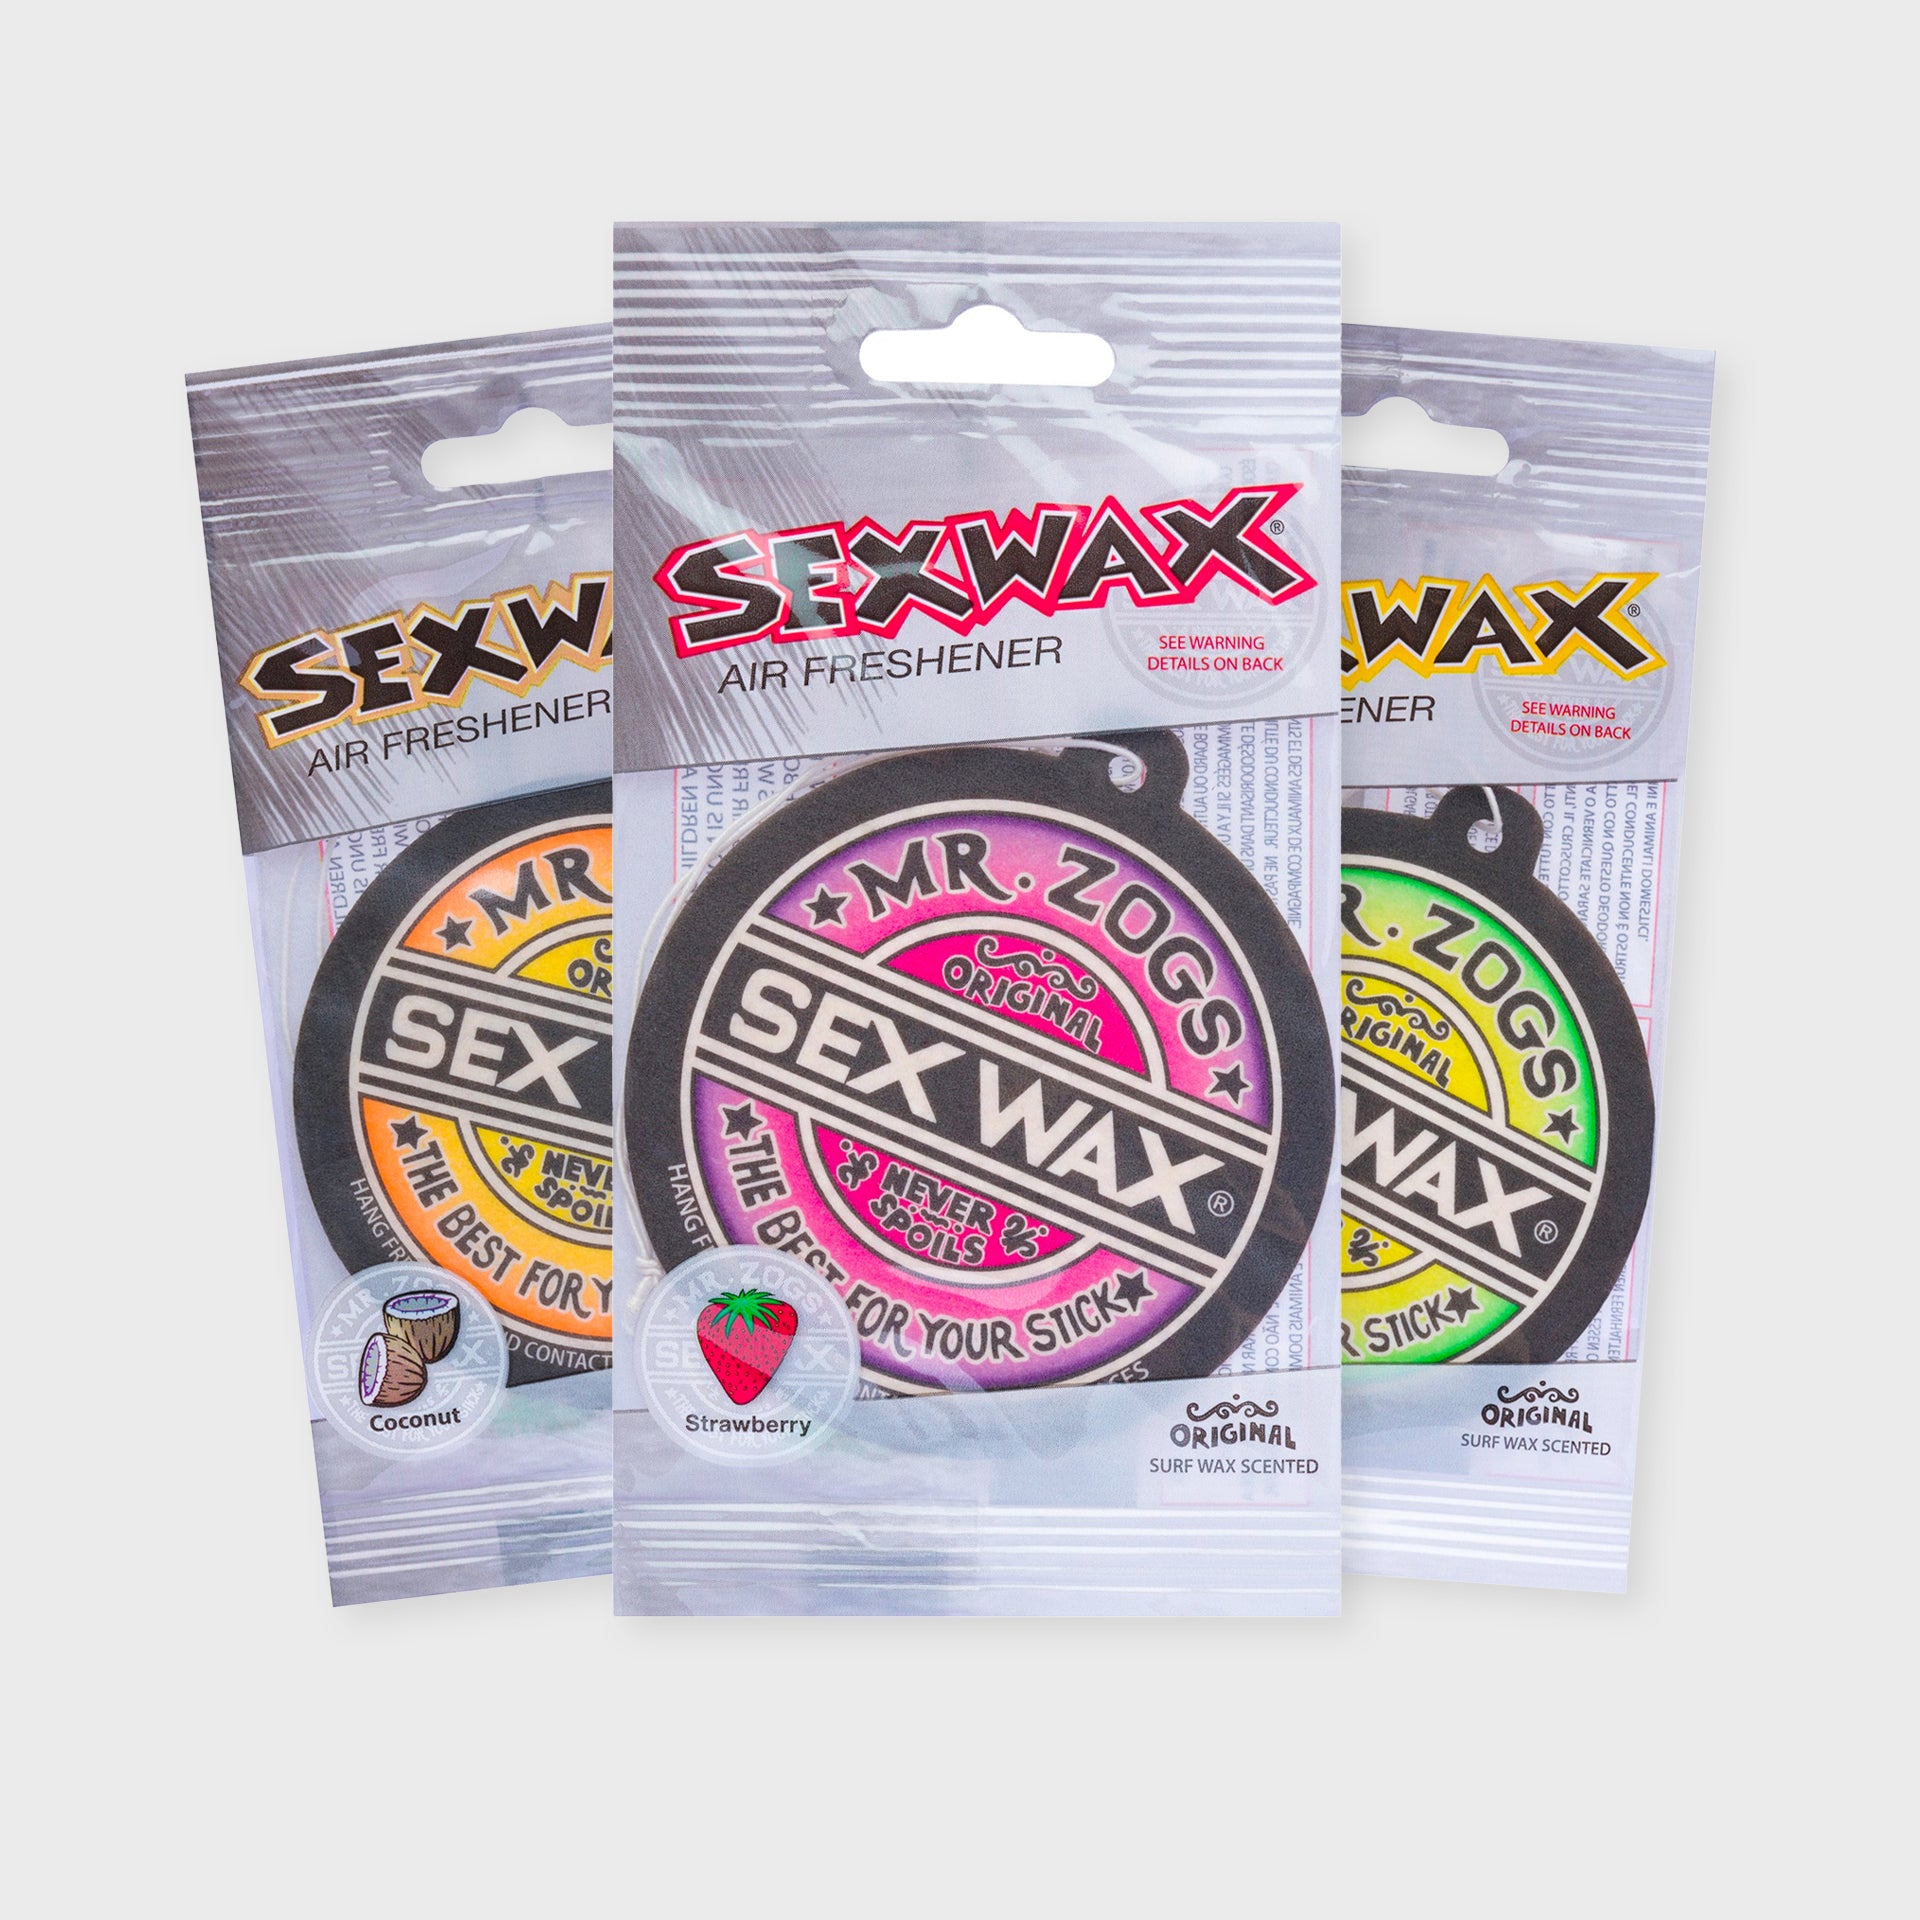 Sex Wax Pineapple Air Freshener - Auto Accessories